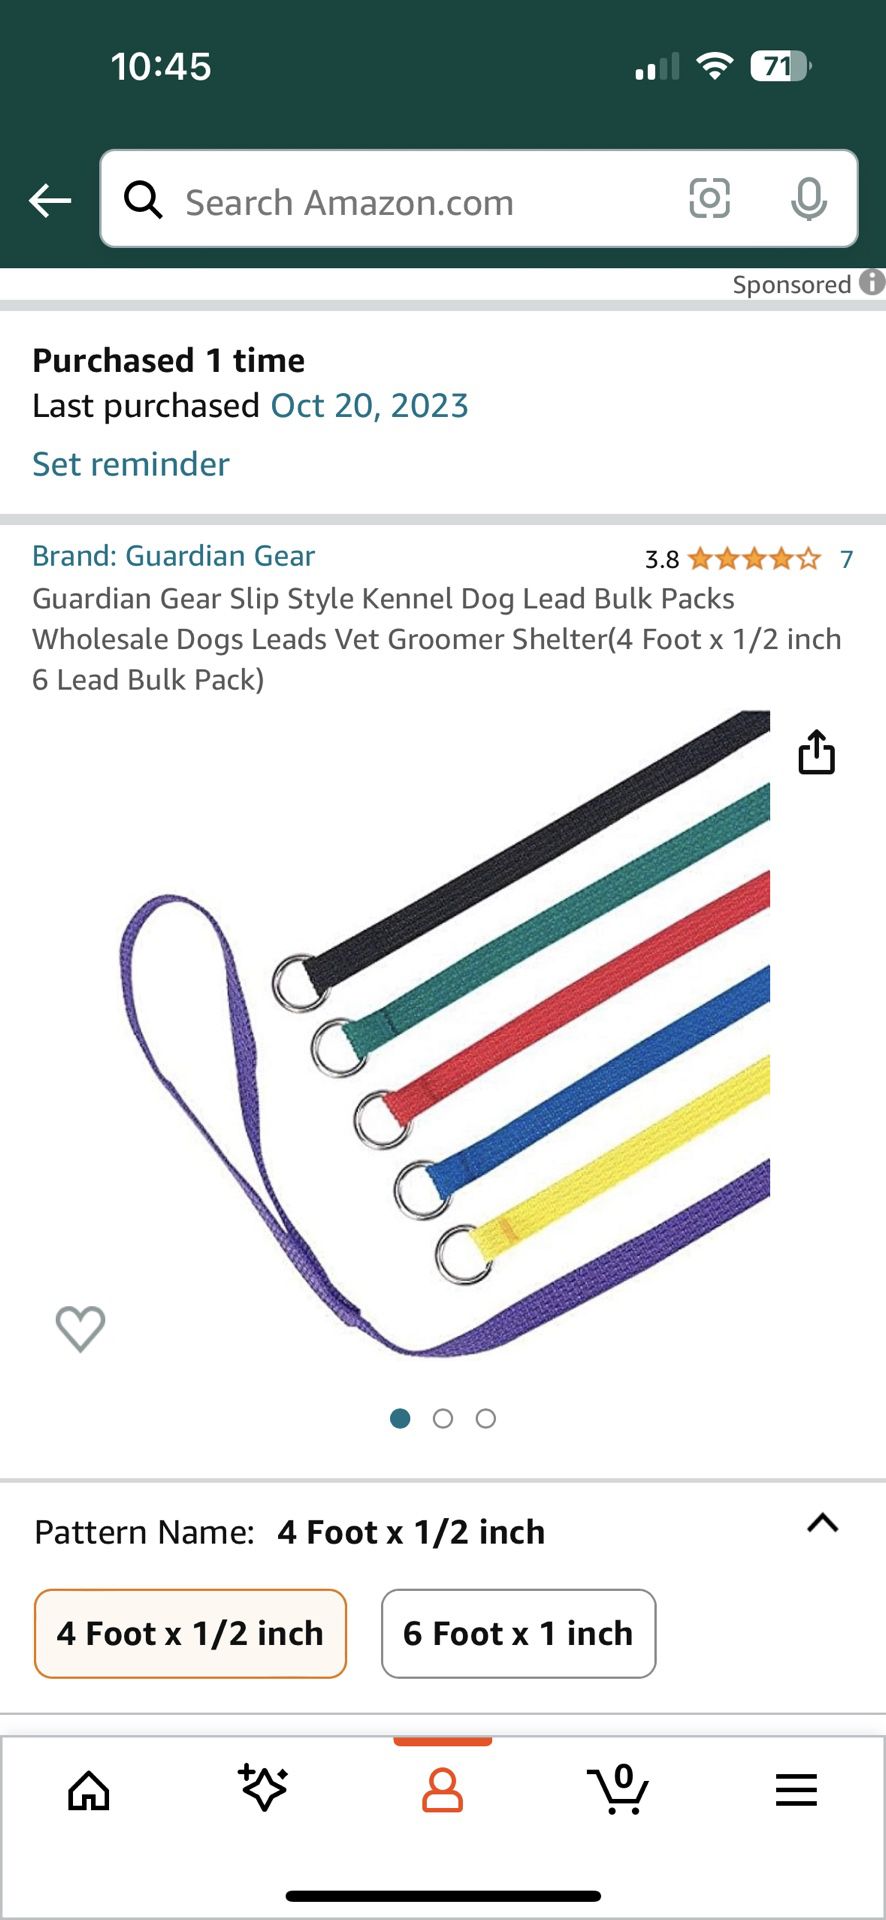 Guardian Gear Slip Style Kennel Dog Lead Bulk Packs Wholesale Dogs Leads Vet Groomer Shelter(4 Foot x 1/2 inch 